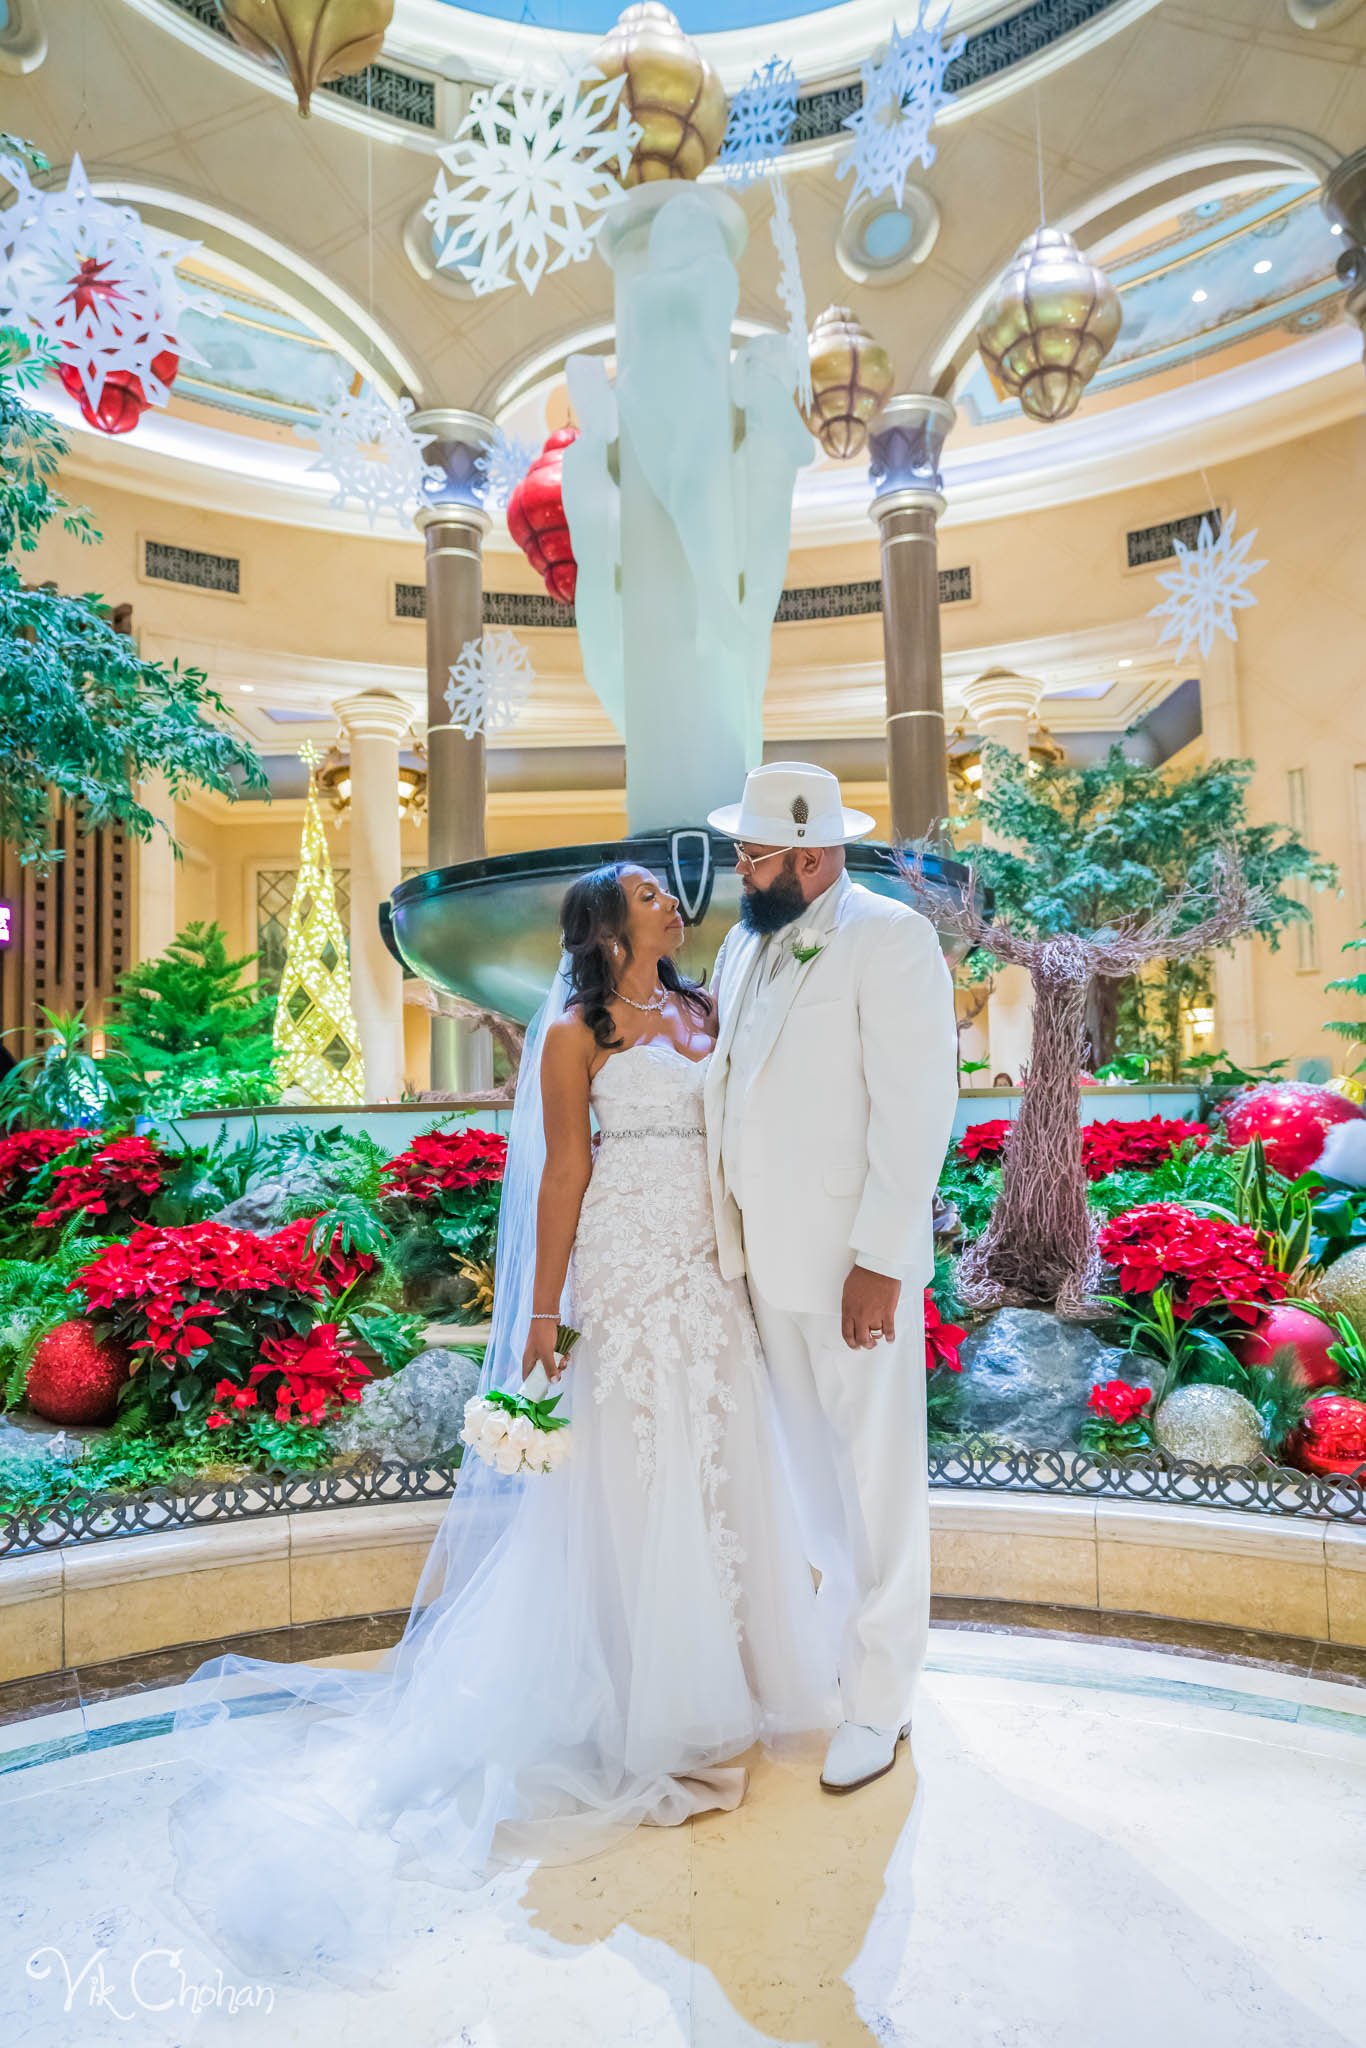 2022-12-10-Berkley-and-Jaun-Las-Vegas-Wedding-Reception-at-Cannaletto-Venetian-Hotel-Vik-Chohan-Photography-Photo-Booth-Social-Media-VCP-003.jpg